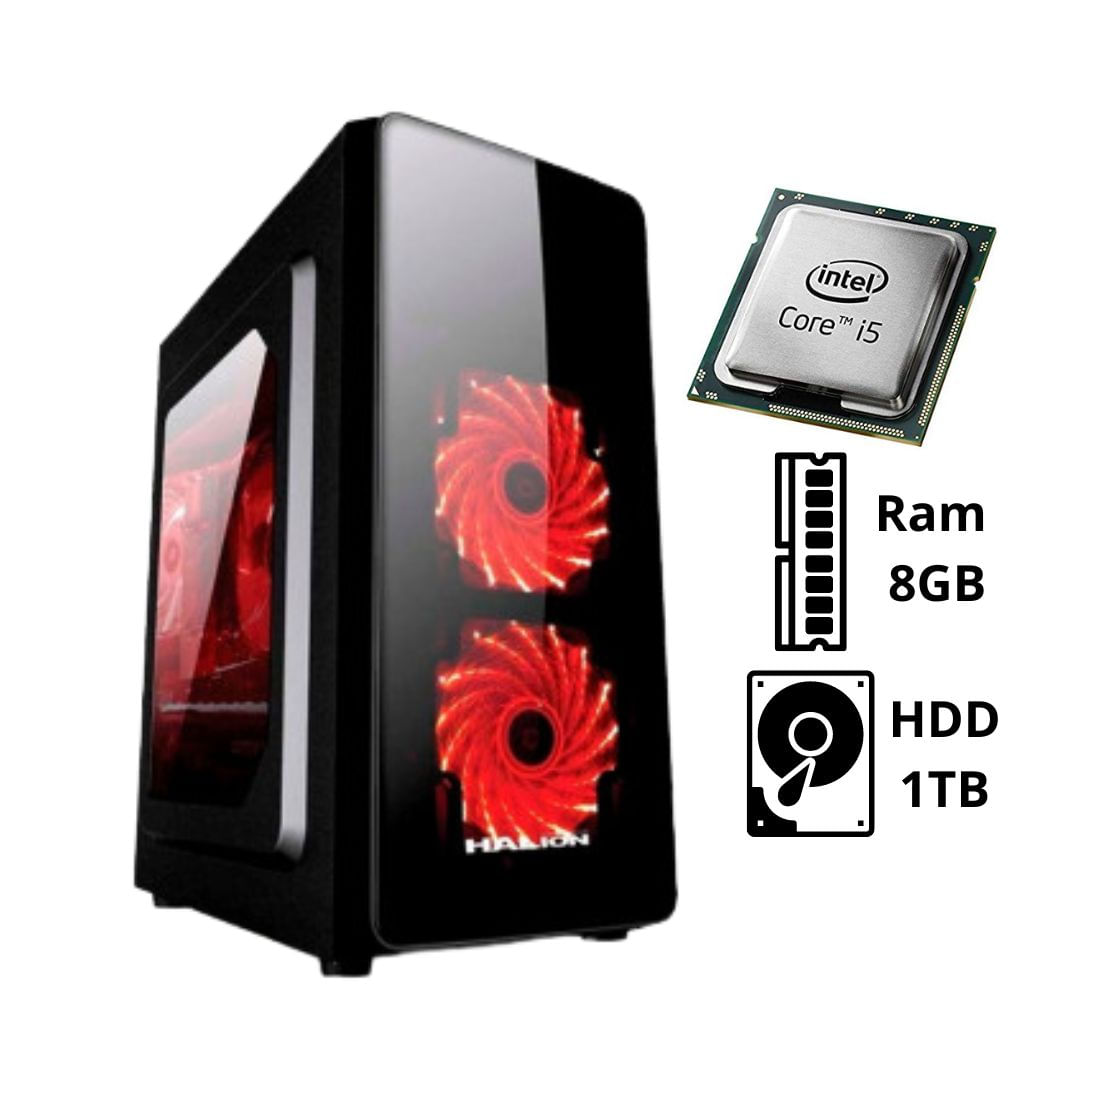 Computadora PC Intel CORE I5 3.2 GHZ RAM 8GB HDD 1TB